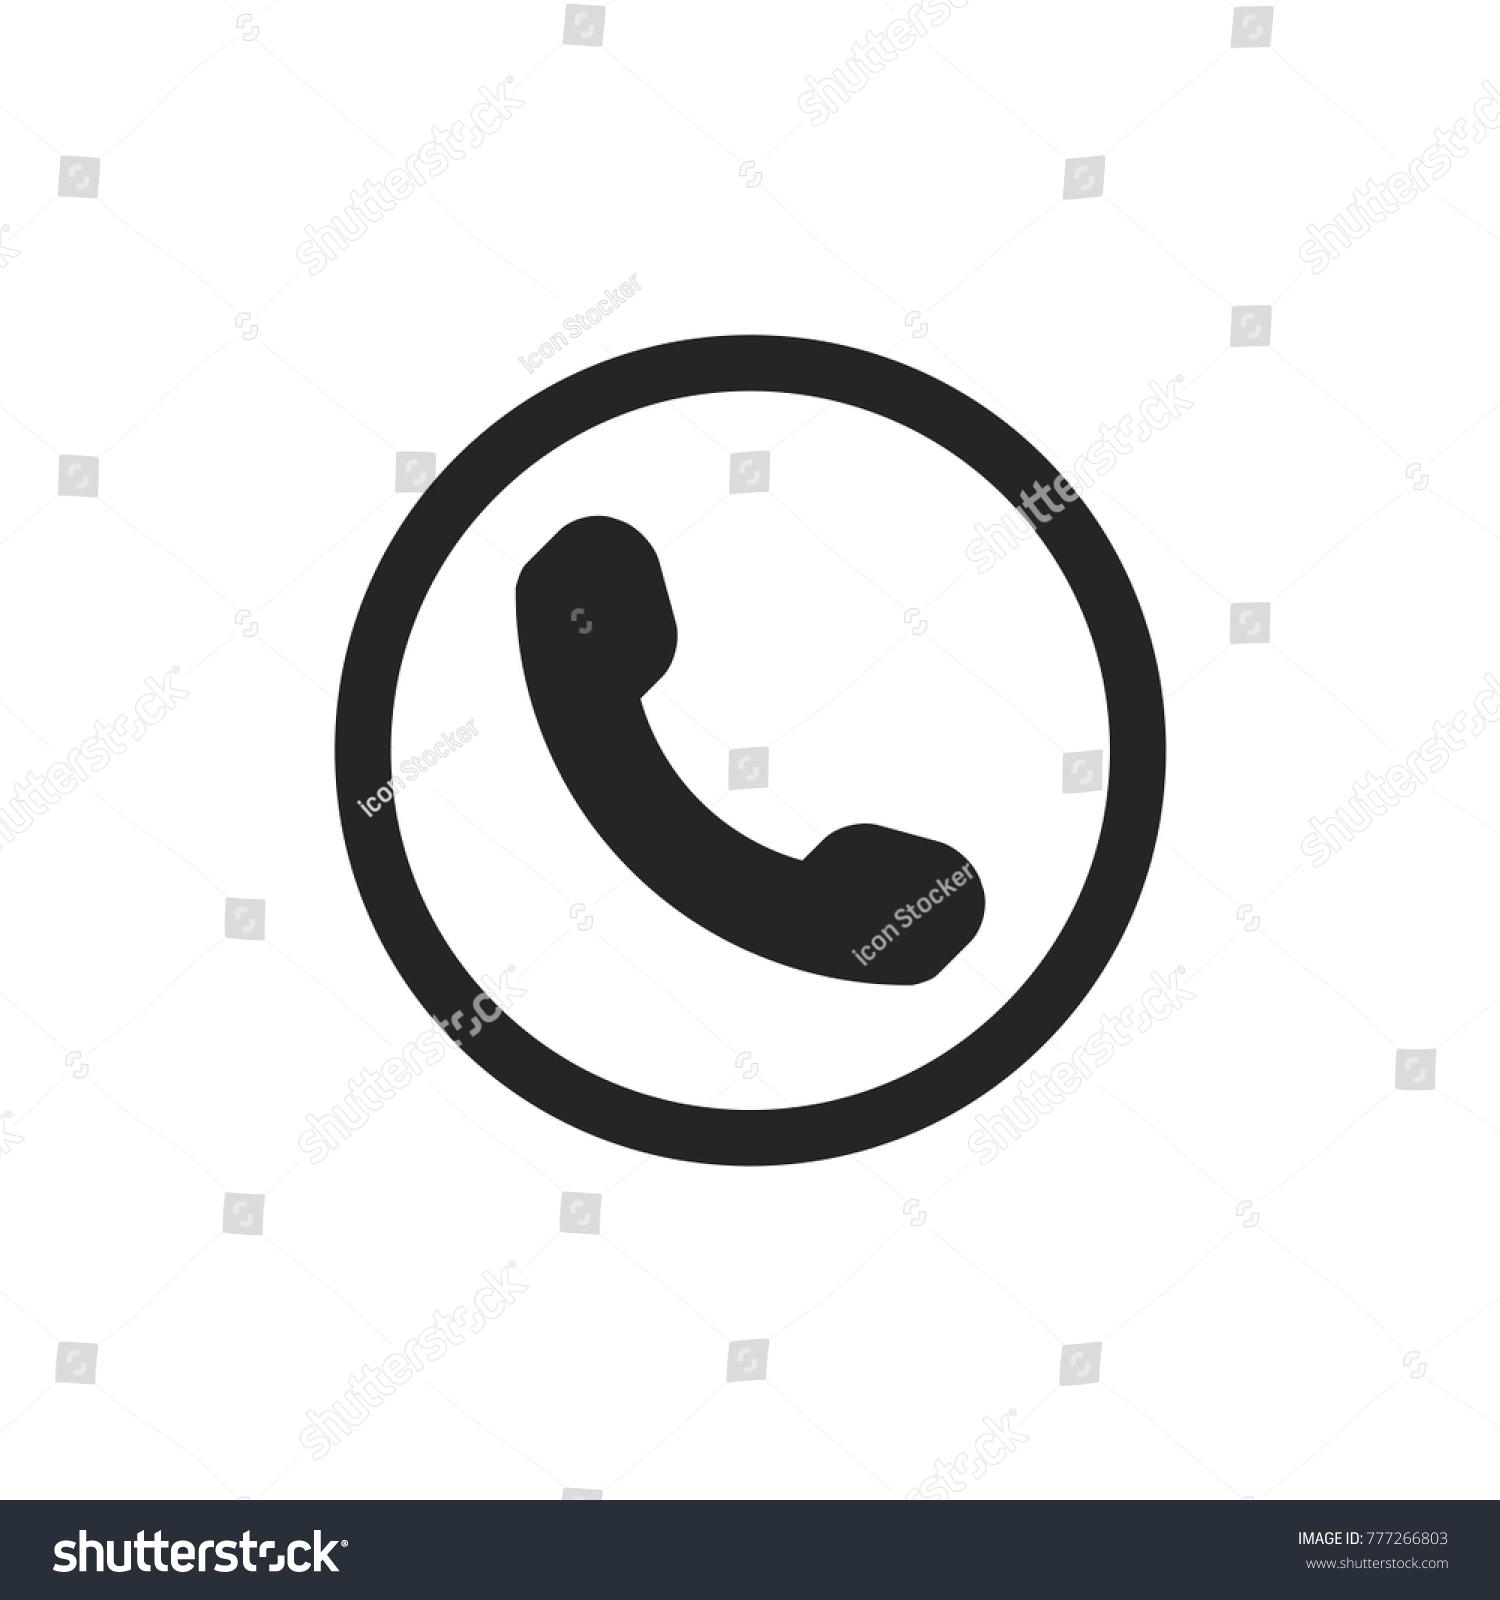 Vector Icon Telephone Handset Over Black Stock Vector 203842210 